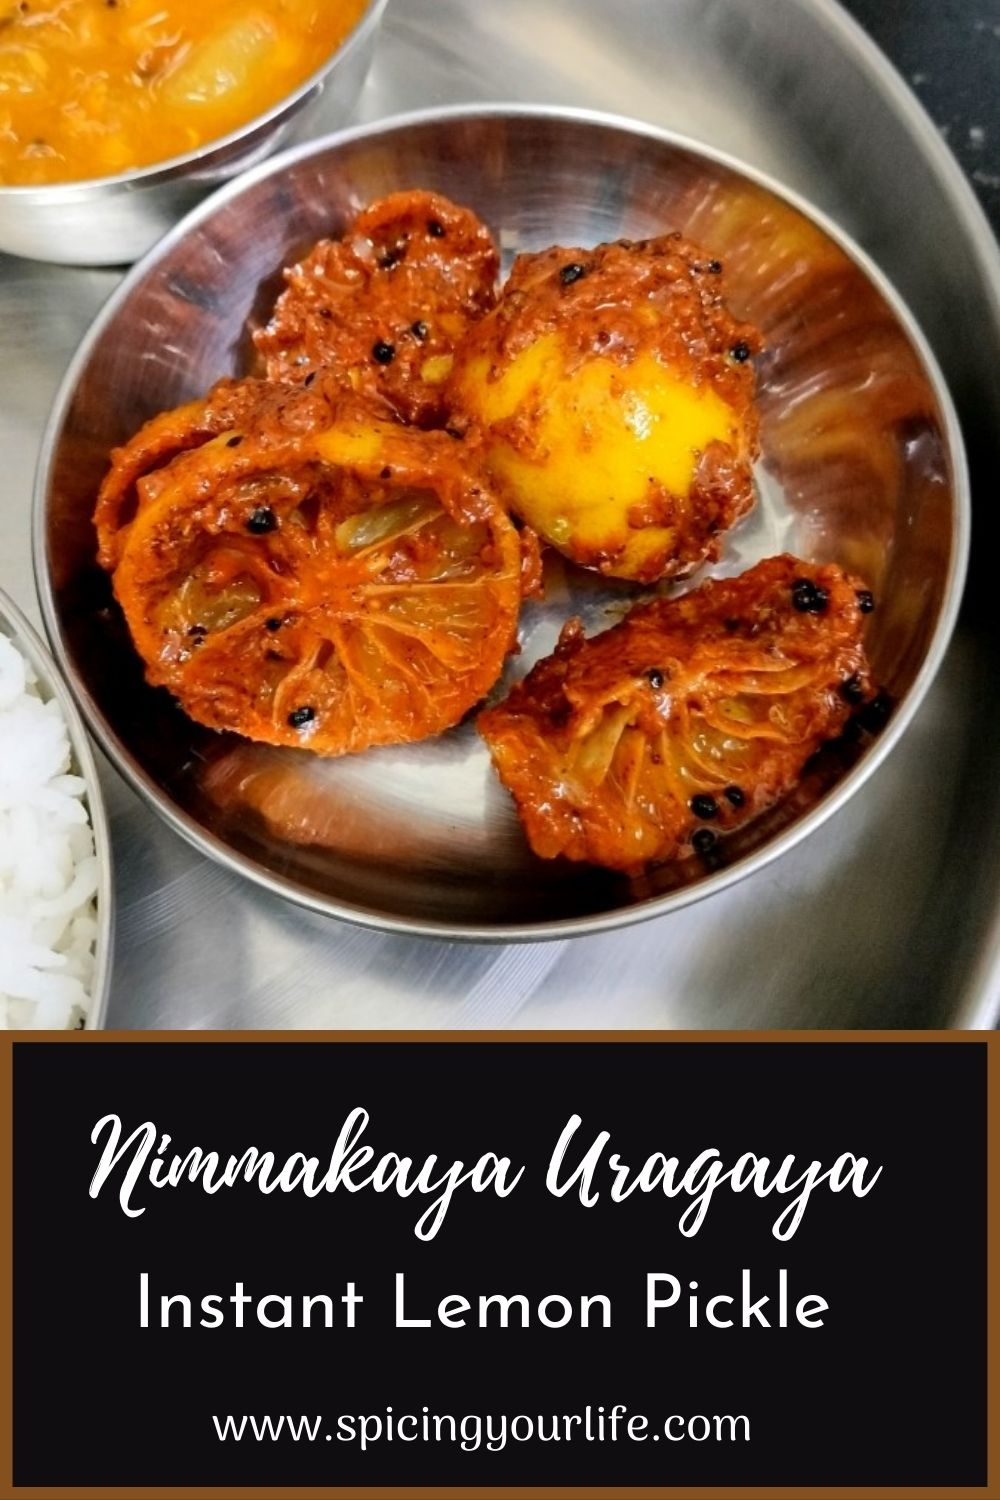 How to make Nimmakaya Uragaya